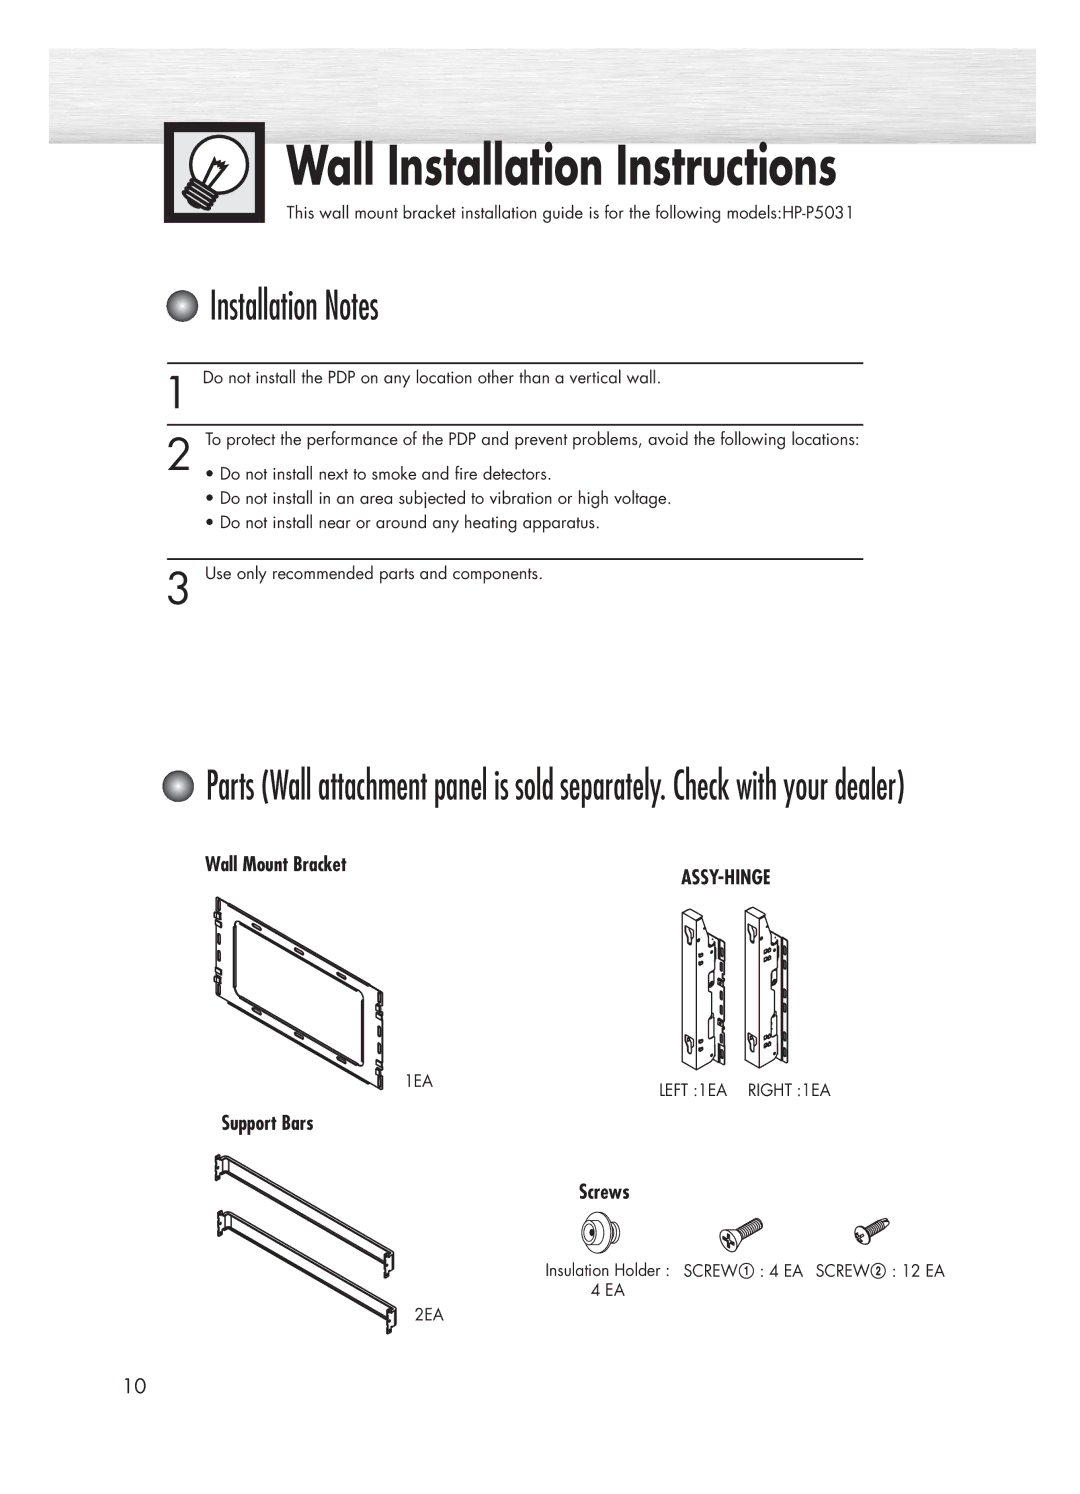 Samsung HP-P5031 manual Wall Installation Instructions, Installation Notes, Wall Mount Bracket, Support Bars Screws 